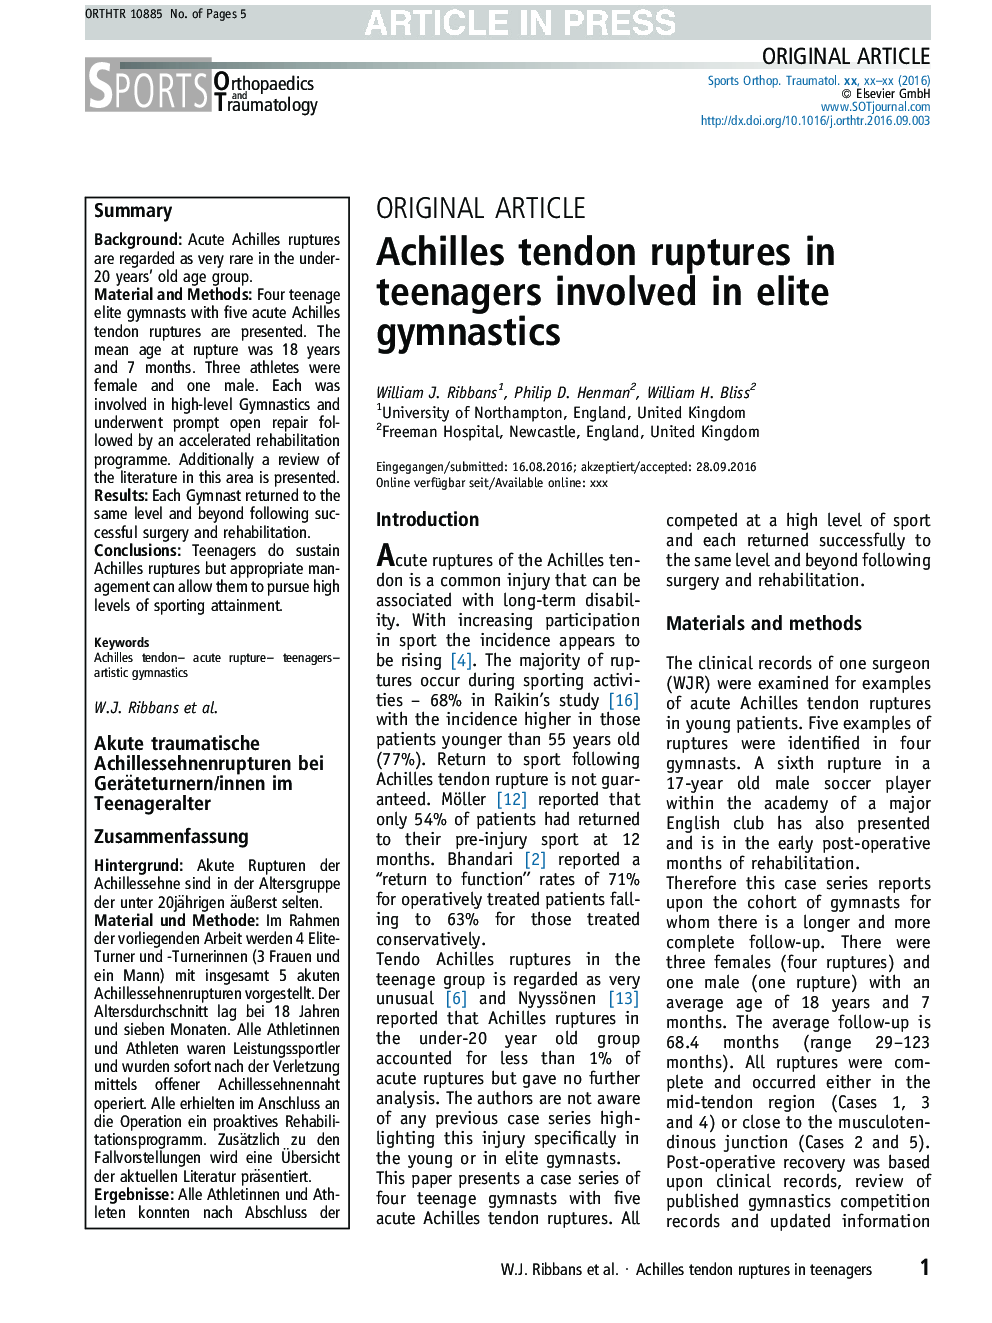 Achilles tendon ruptures in teenagers involved in elite gymnastics